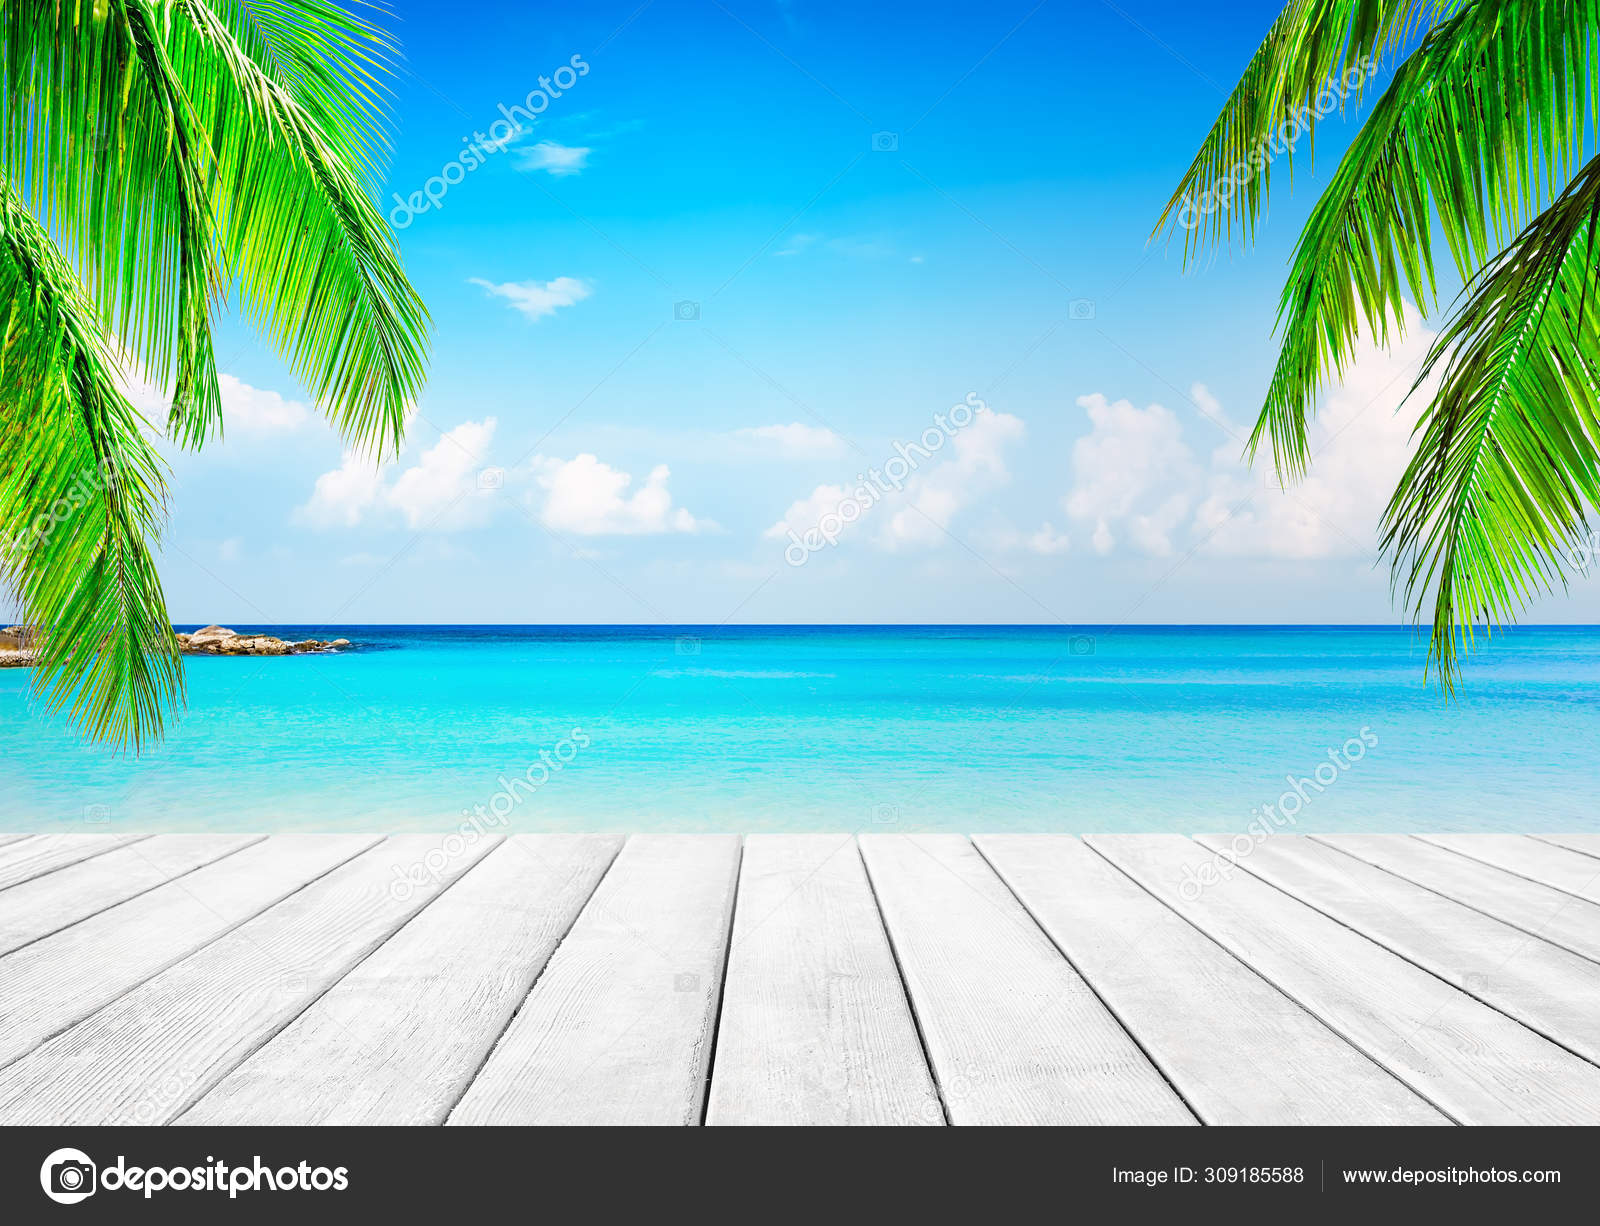 Vacation holidays background wallpaper. Stock Photo by ©Preto_perola  309185588